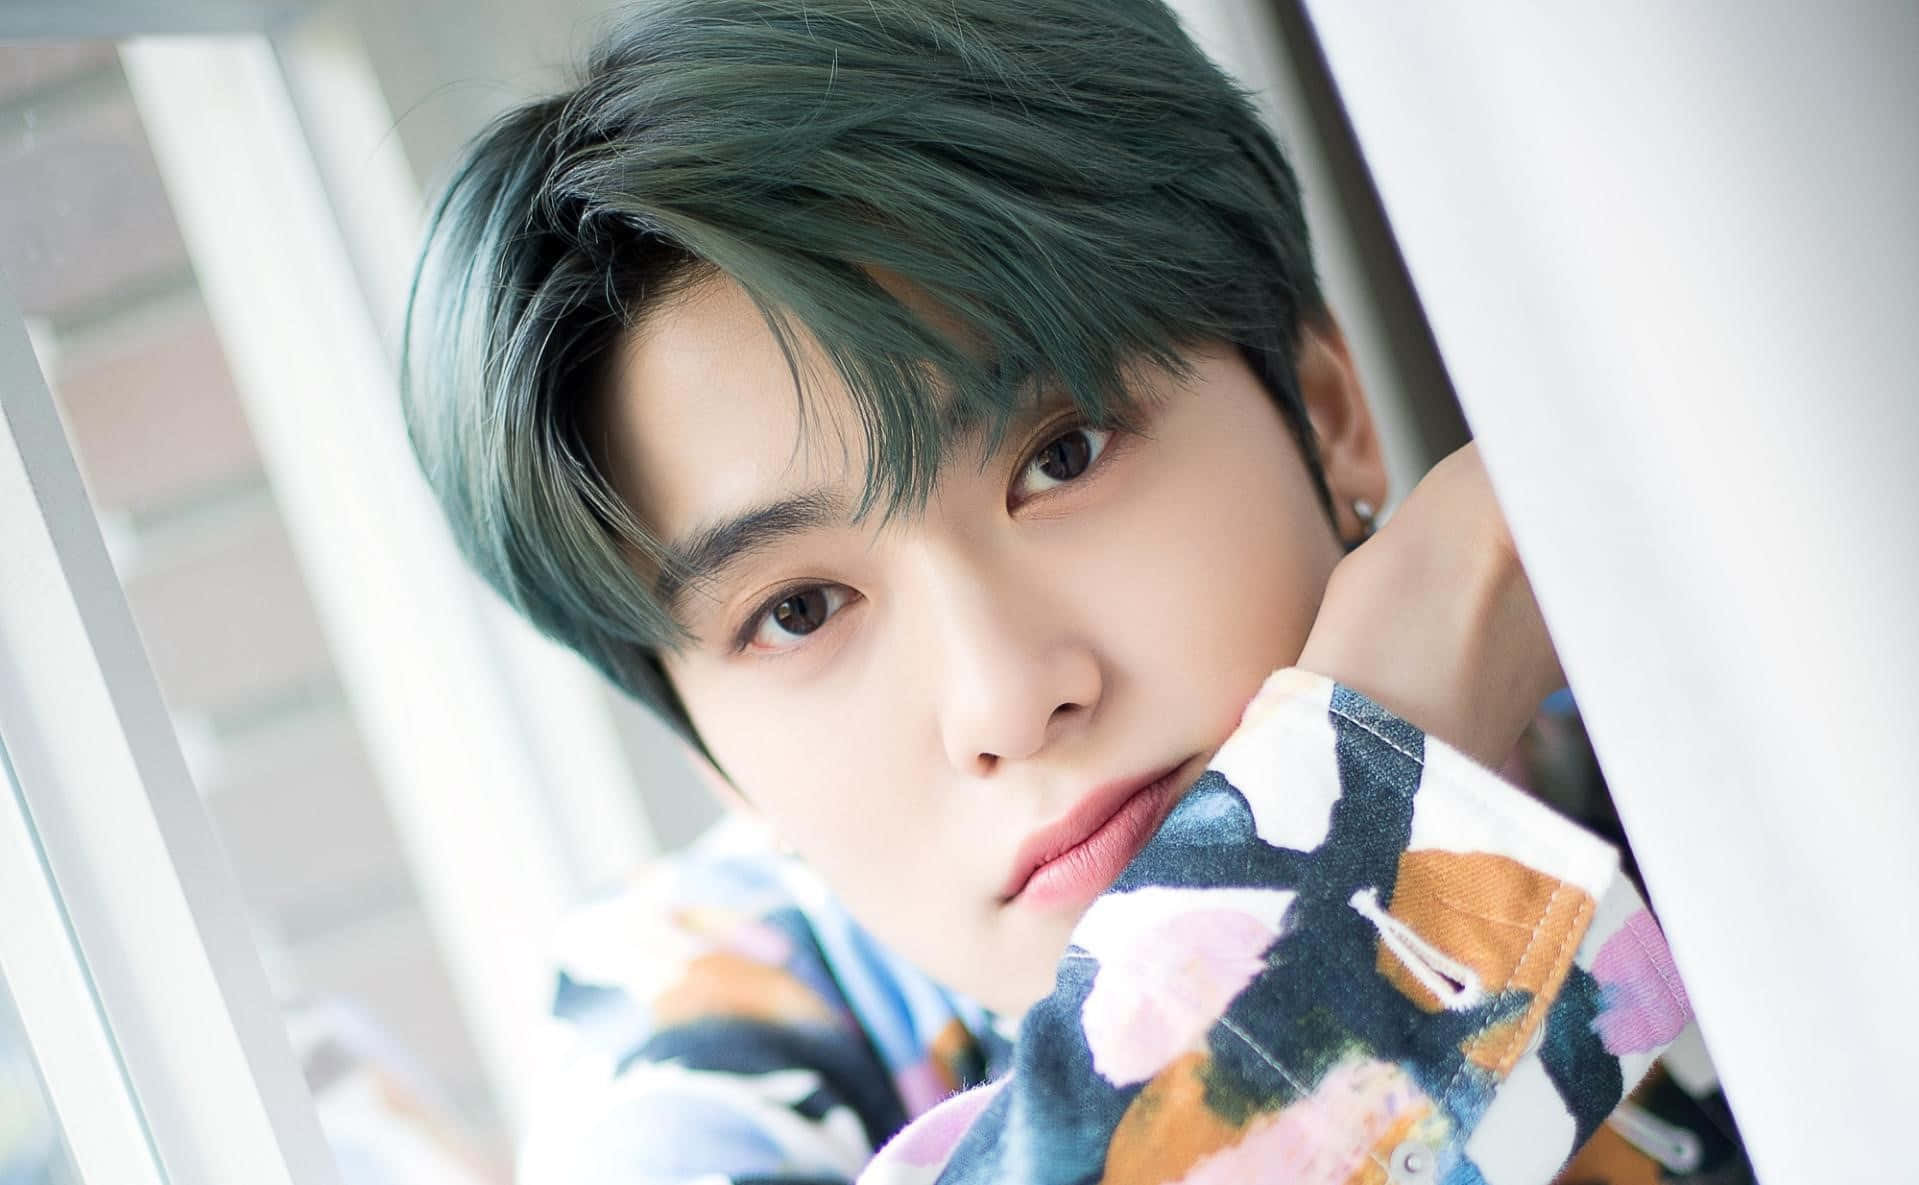 Nct Jaehyun With Green Hair Wallpaper